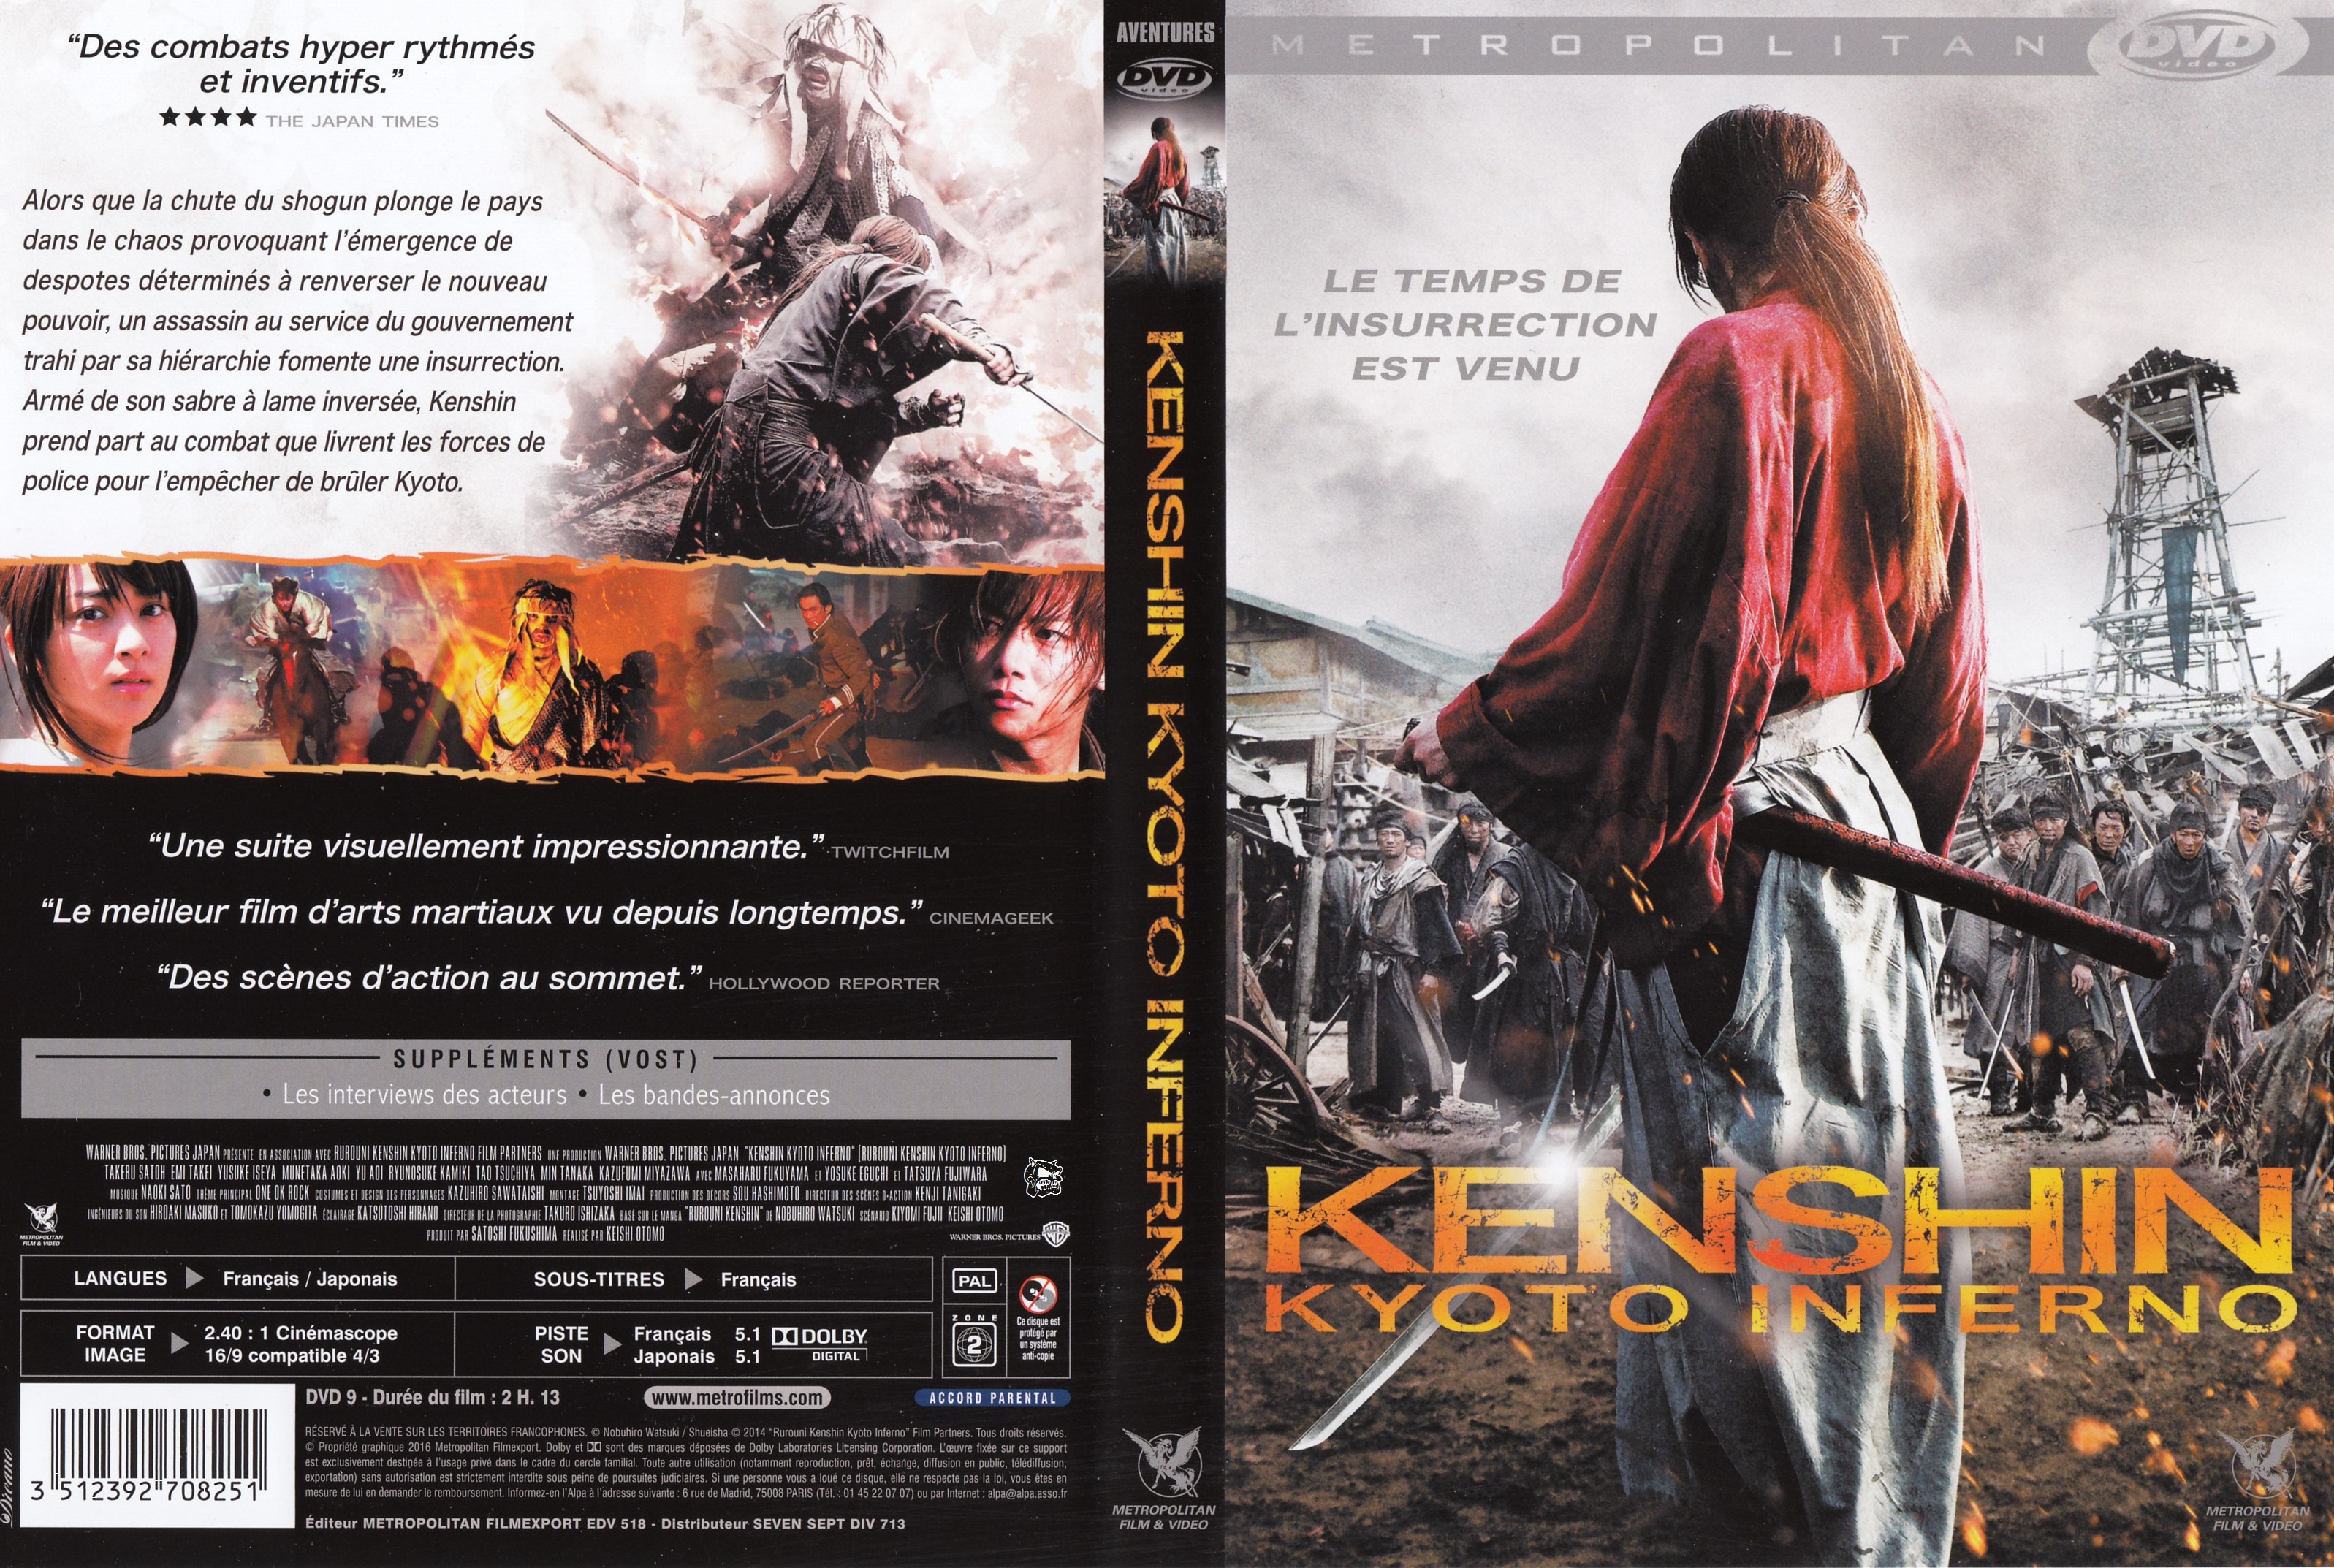 Jaquette DVD Kenshin Kyoto Inferno